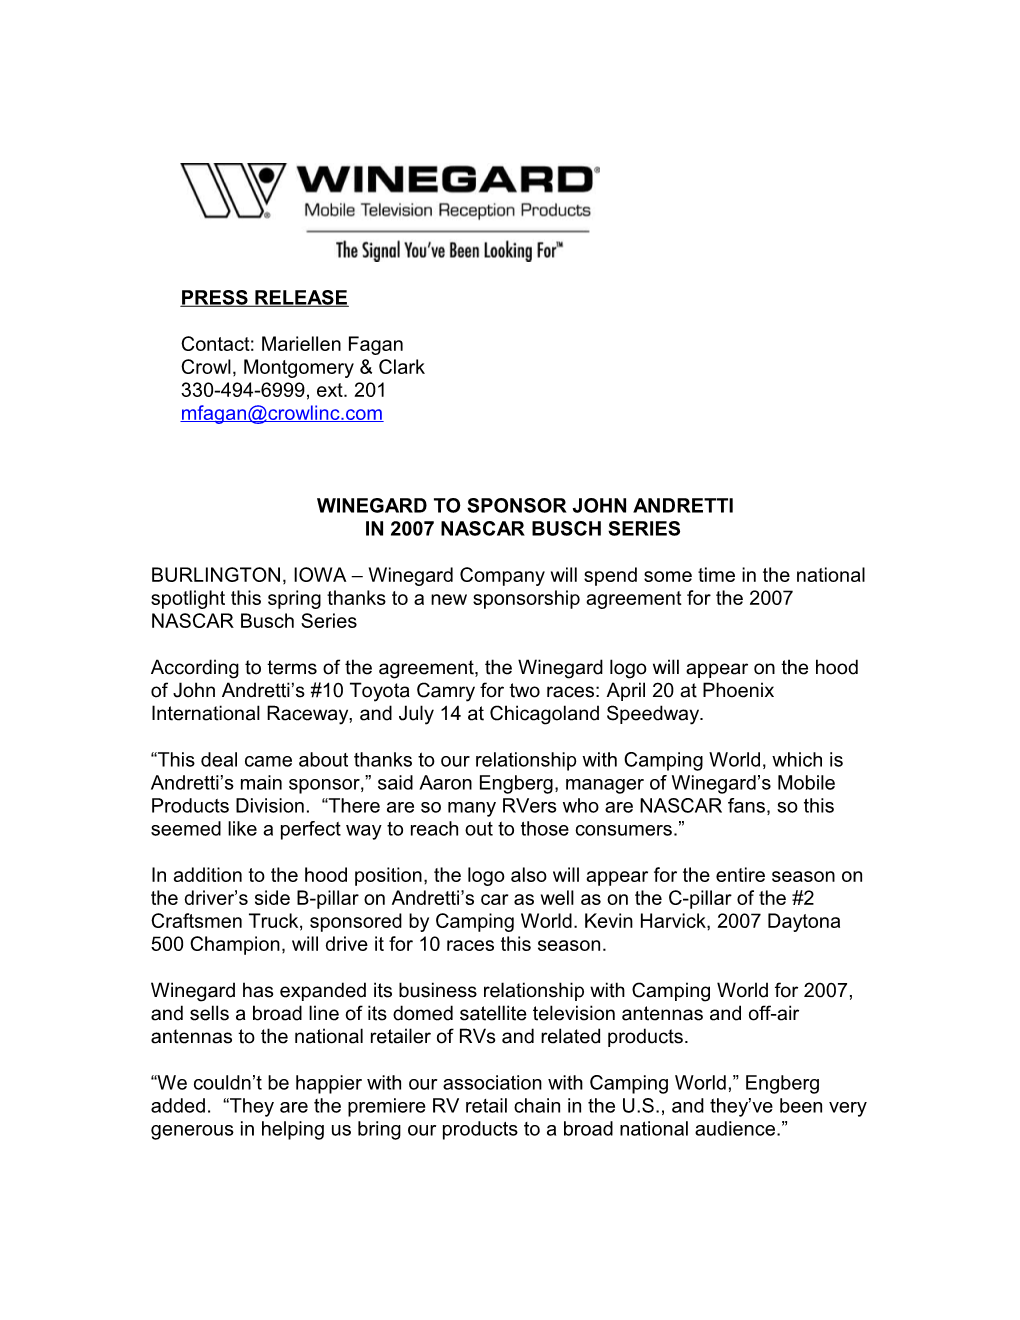 Winegard to Sponsor John Andretti in 2007 Nascar Busch Series